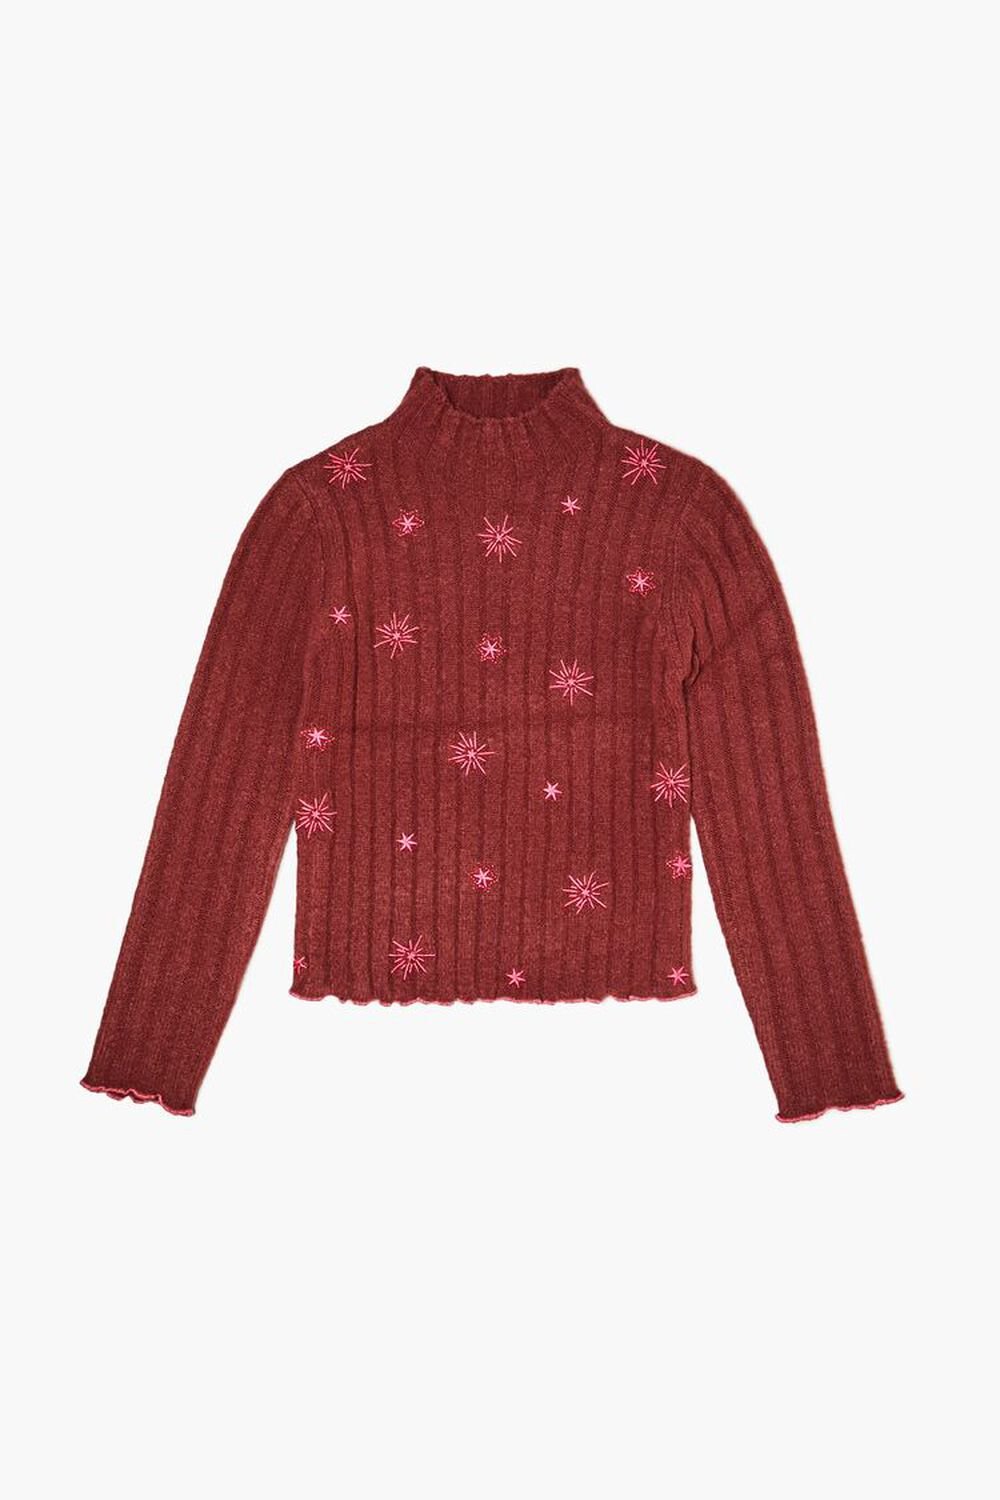 BURGUNDY/PINK Girls Star Print Sweater (Kids), image 1